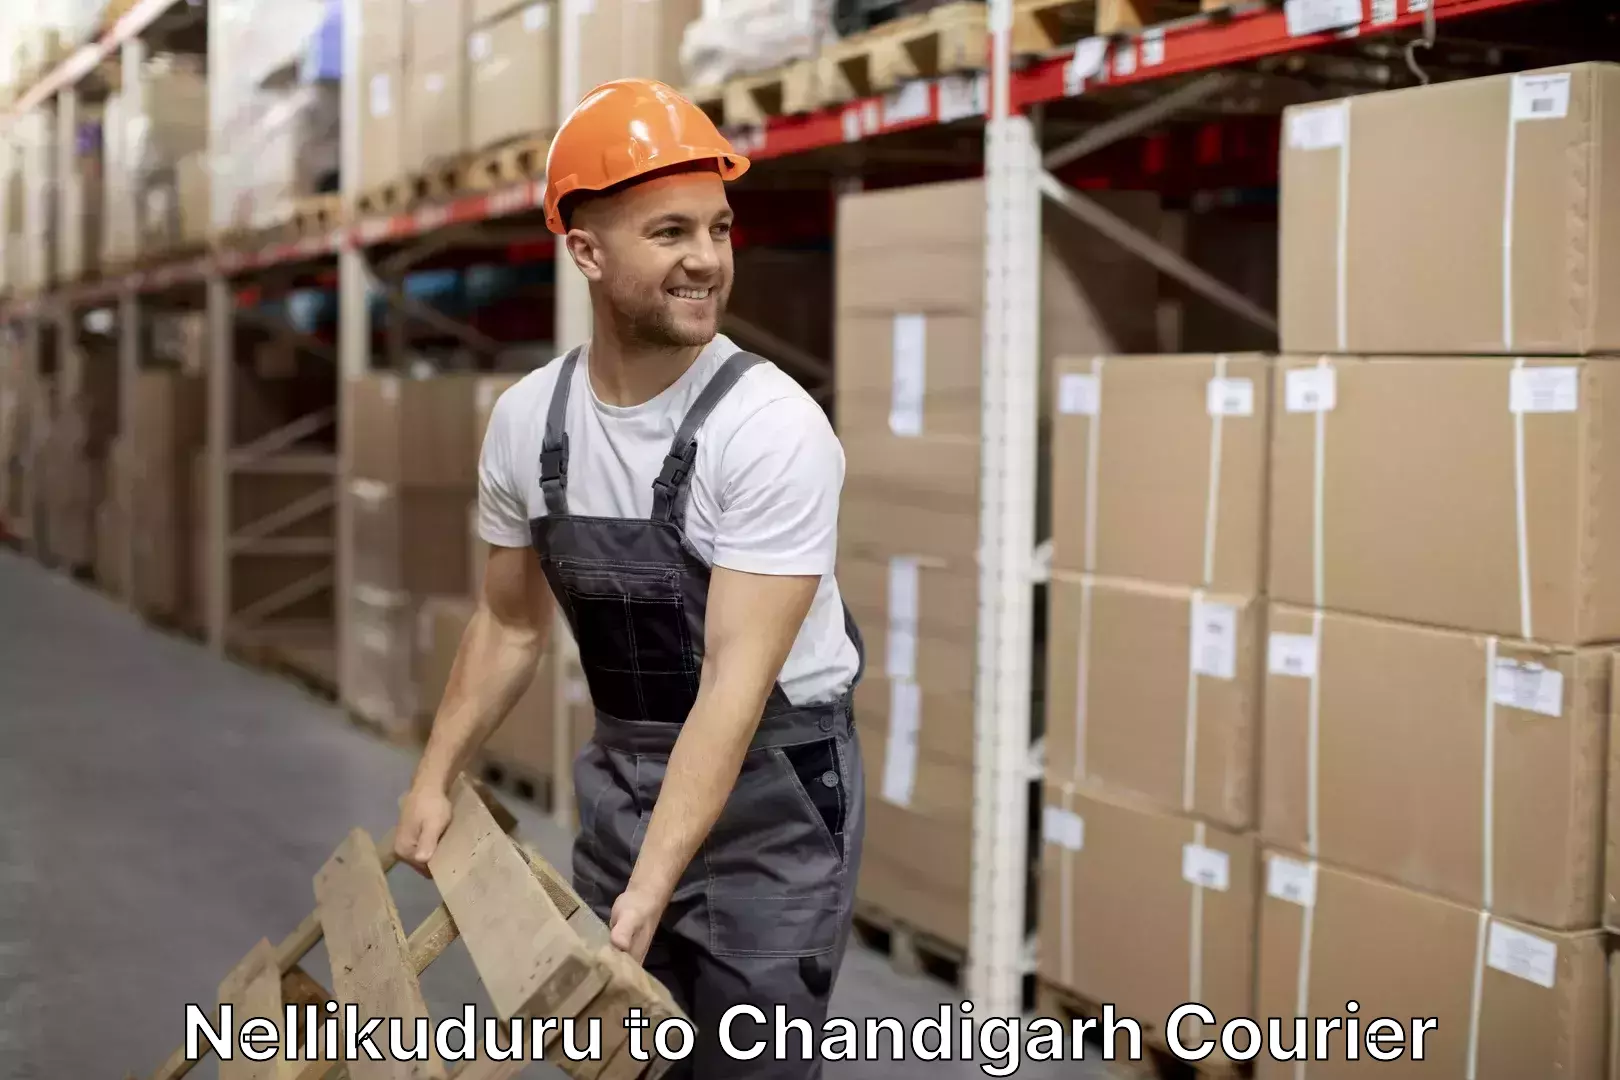 Professional furniture movers Nellikuduru to Chandigarh